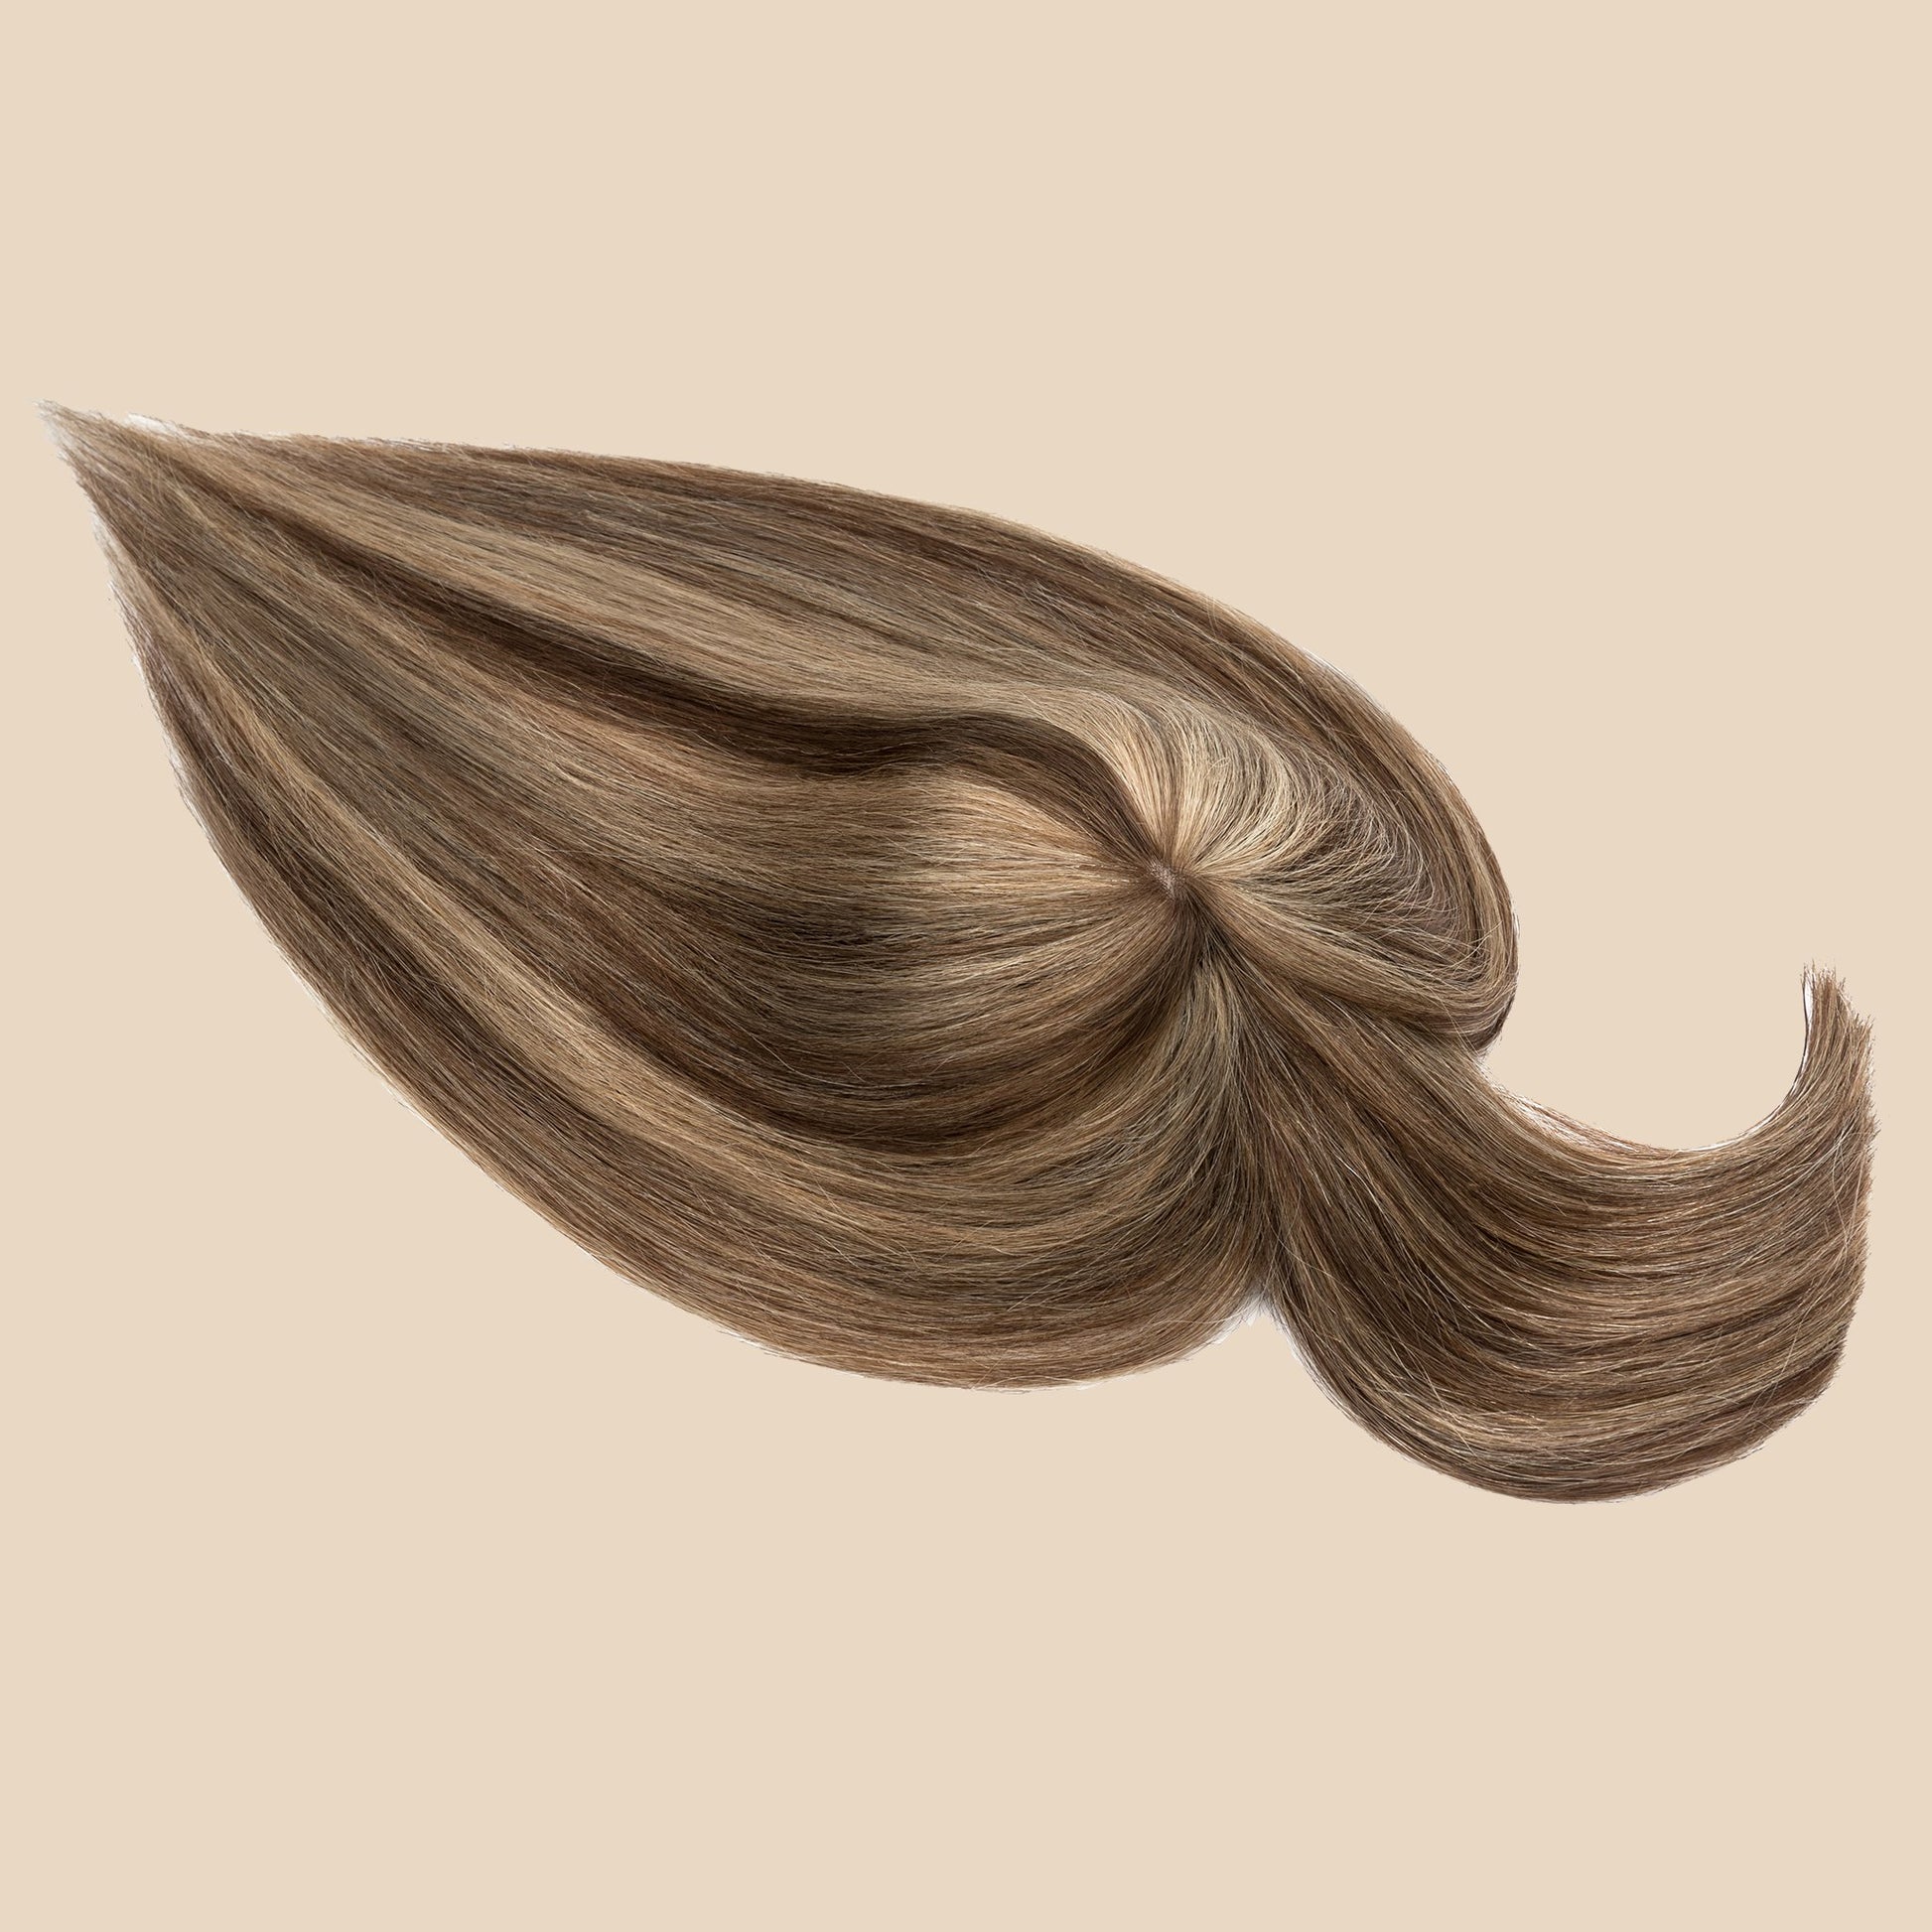 4x5" Silk Circle Top Medium Brown Blonde Human Hair Topper with Bangs segohair.com